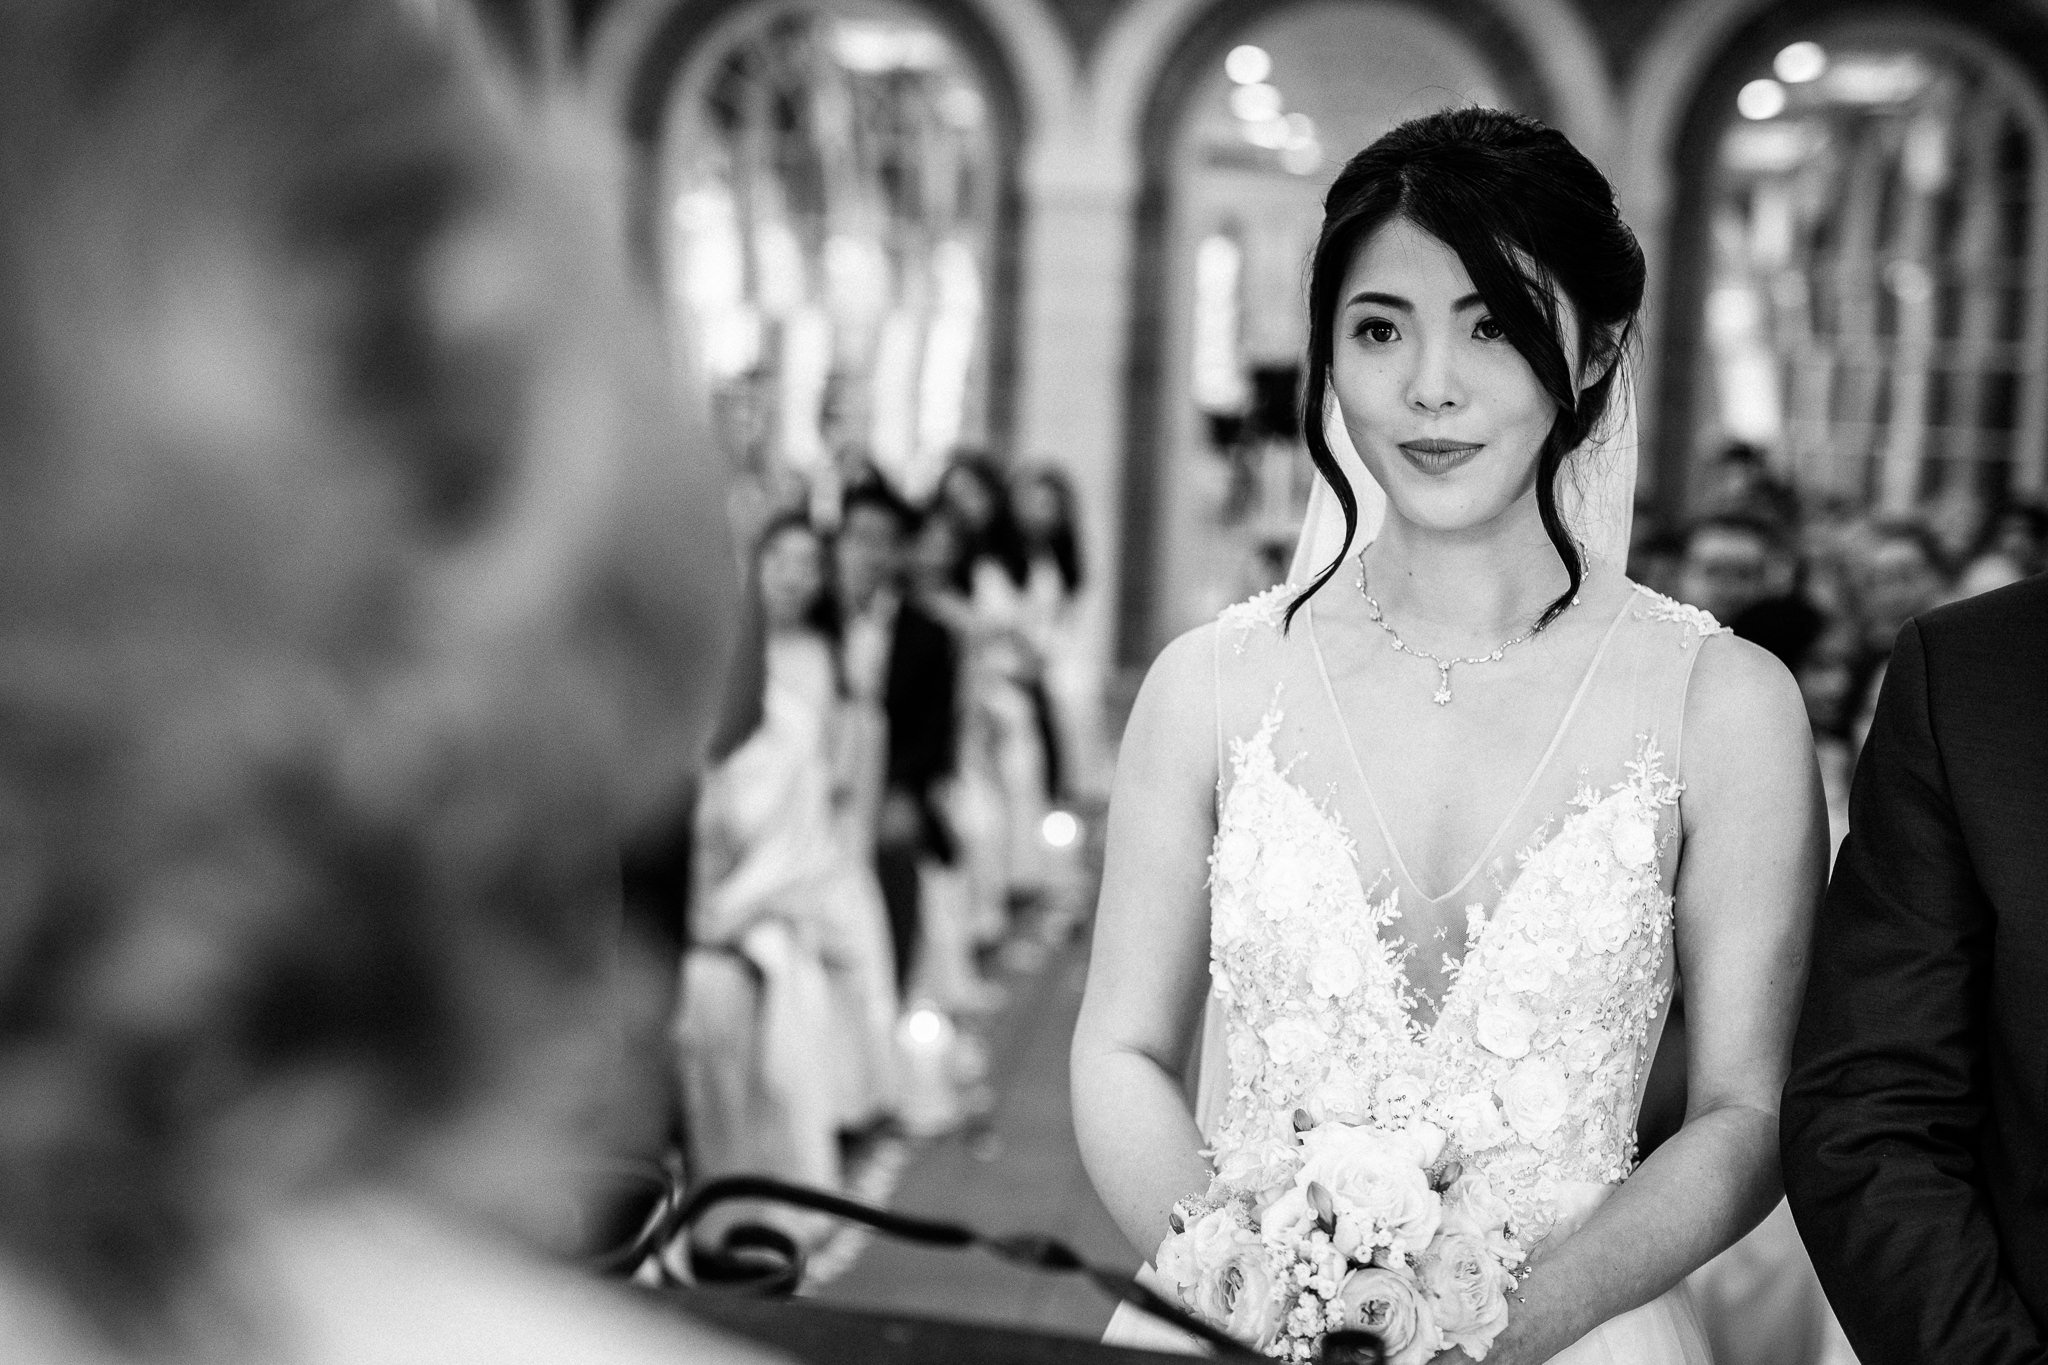  Bride standing in front of the registrar 